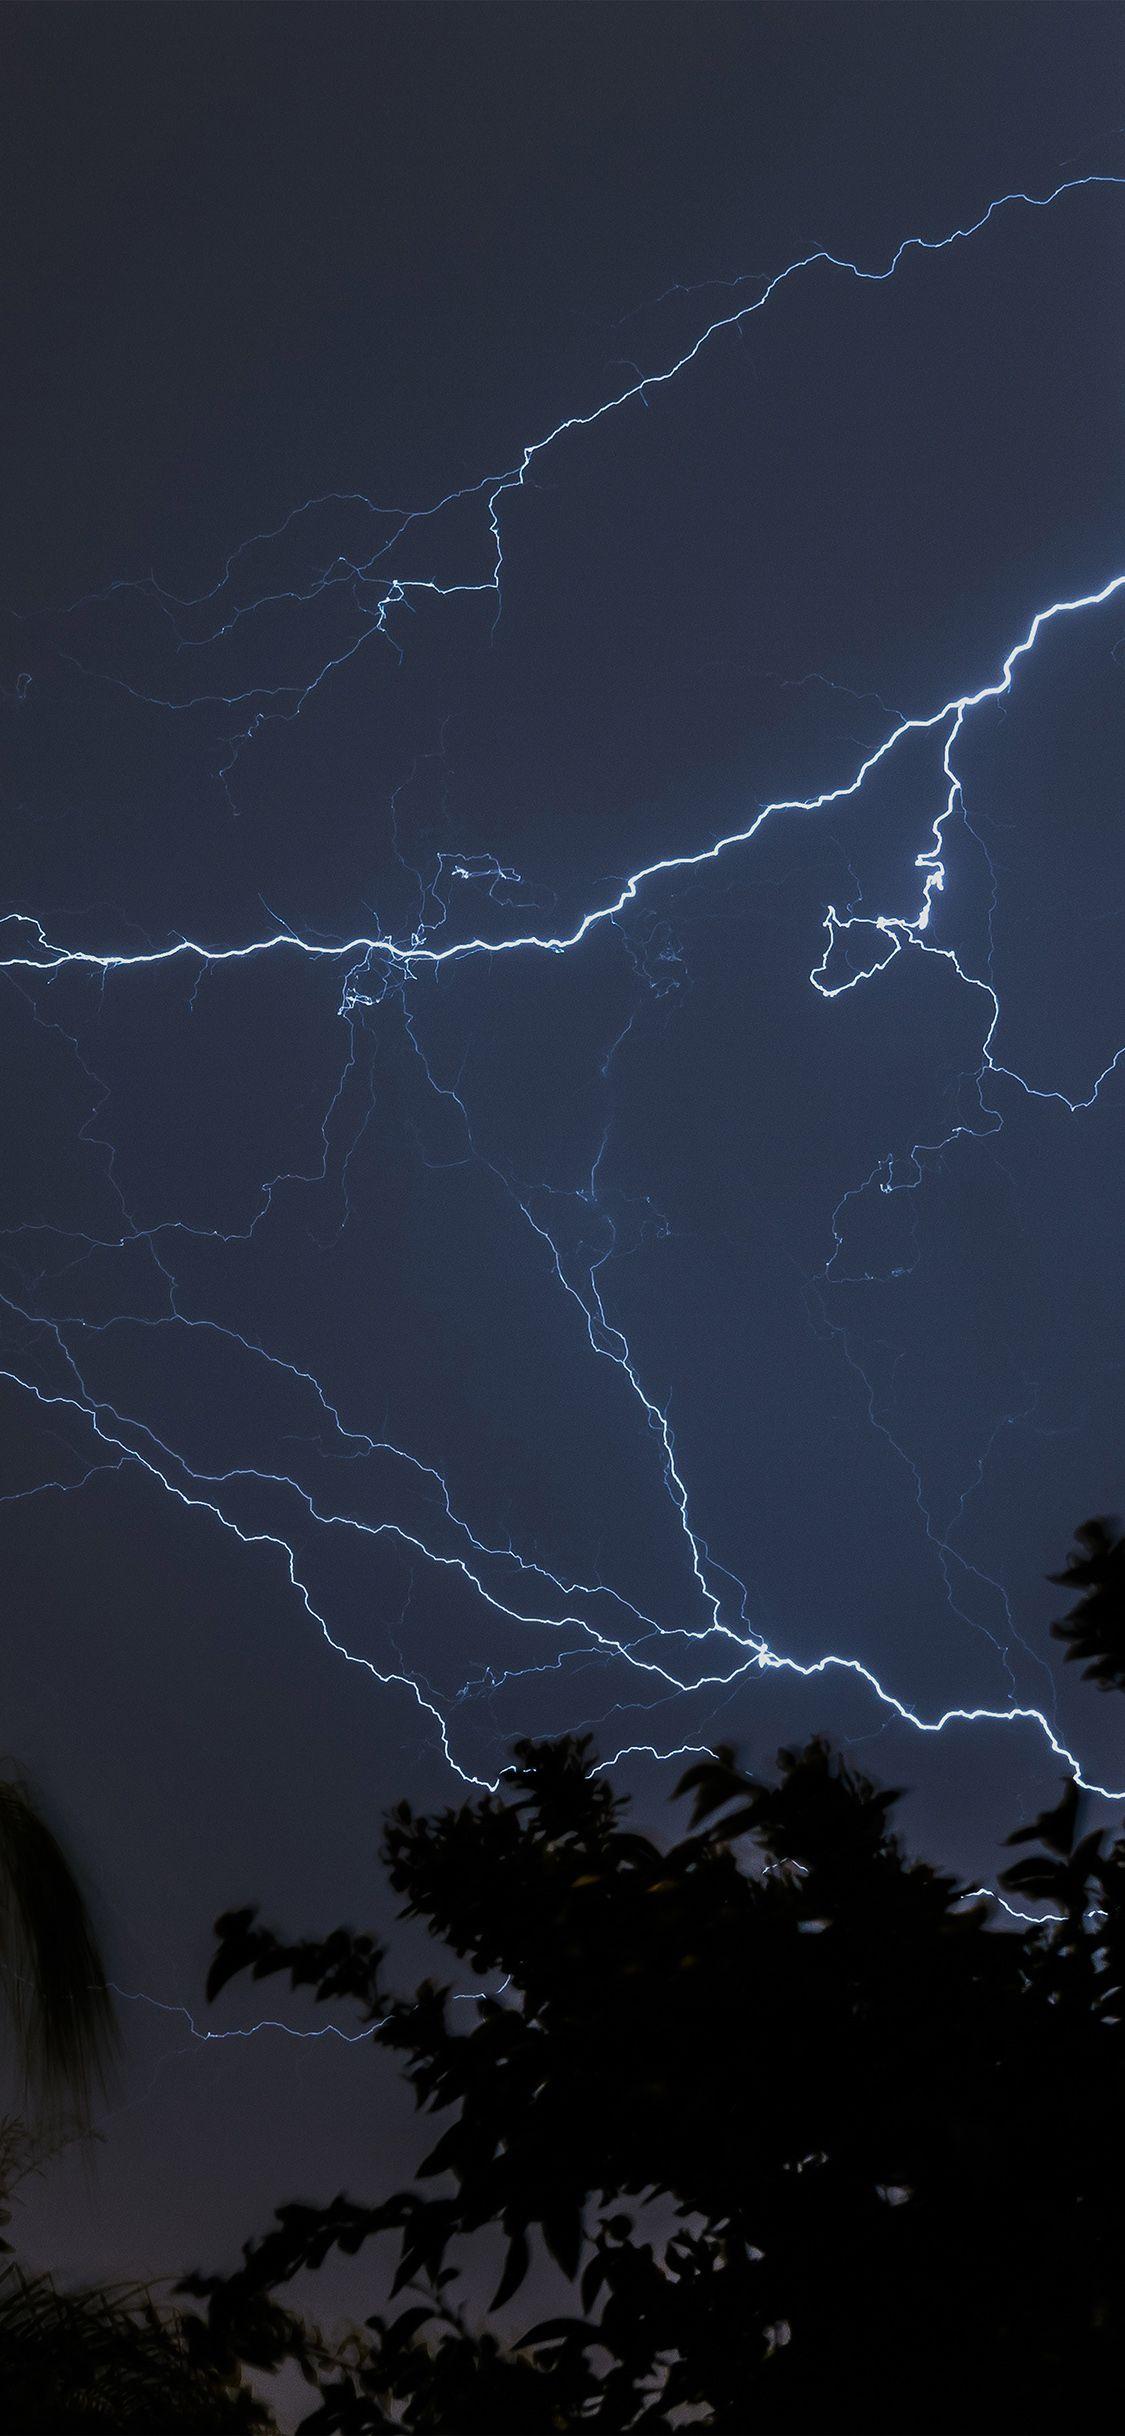 iPhone X wallpaper. thunder bolt sky night